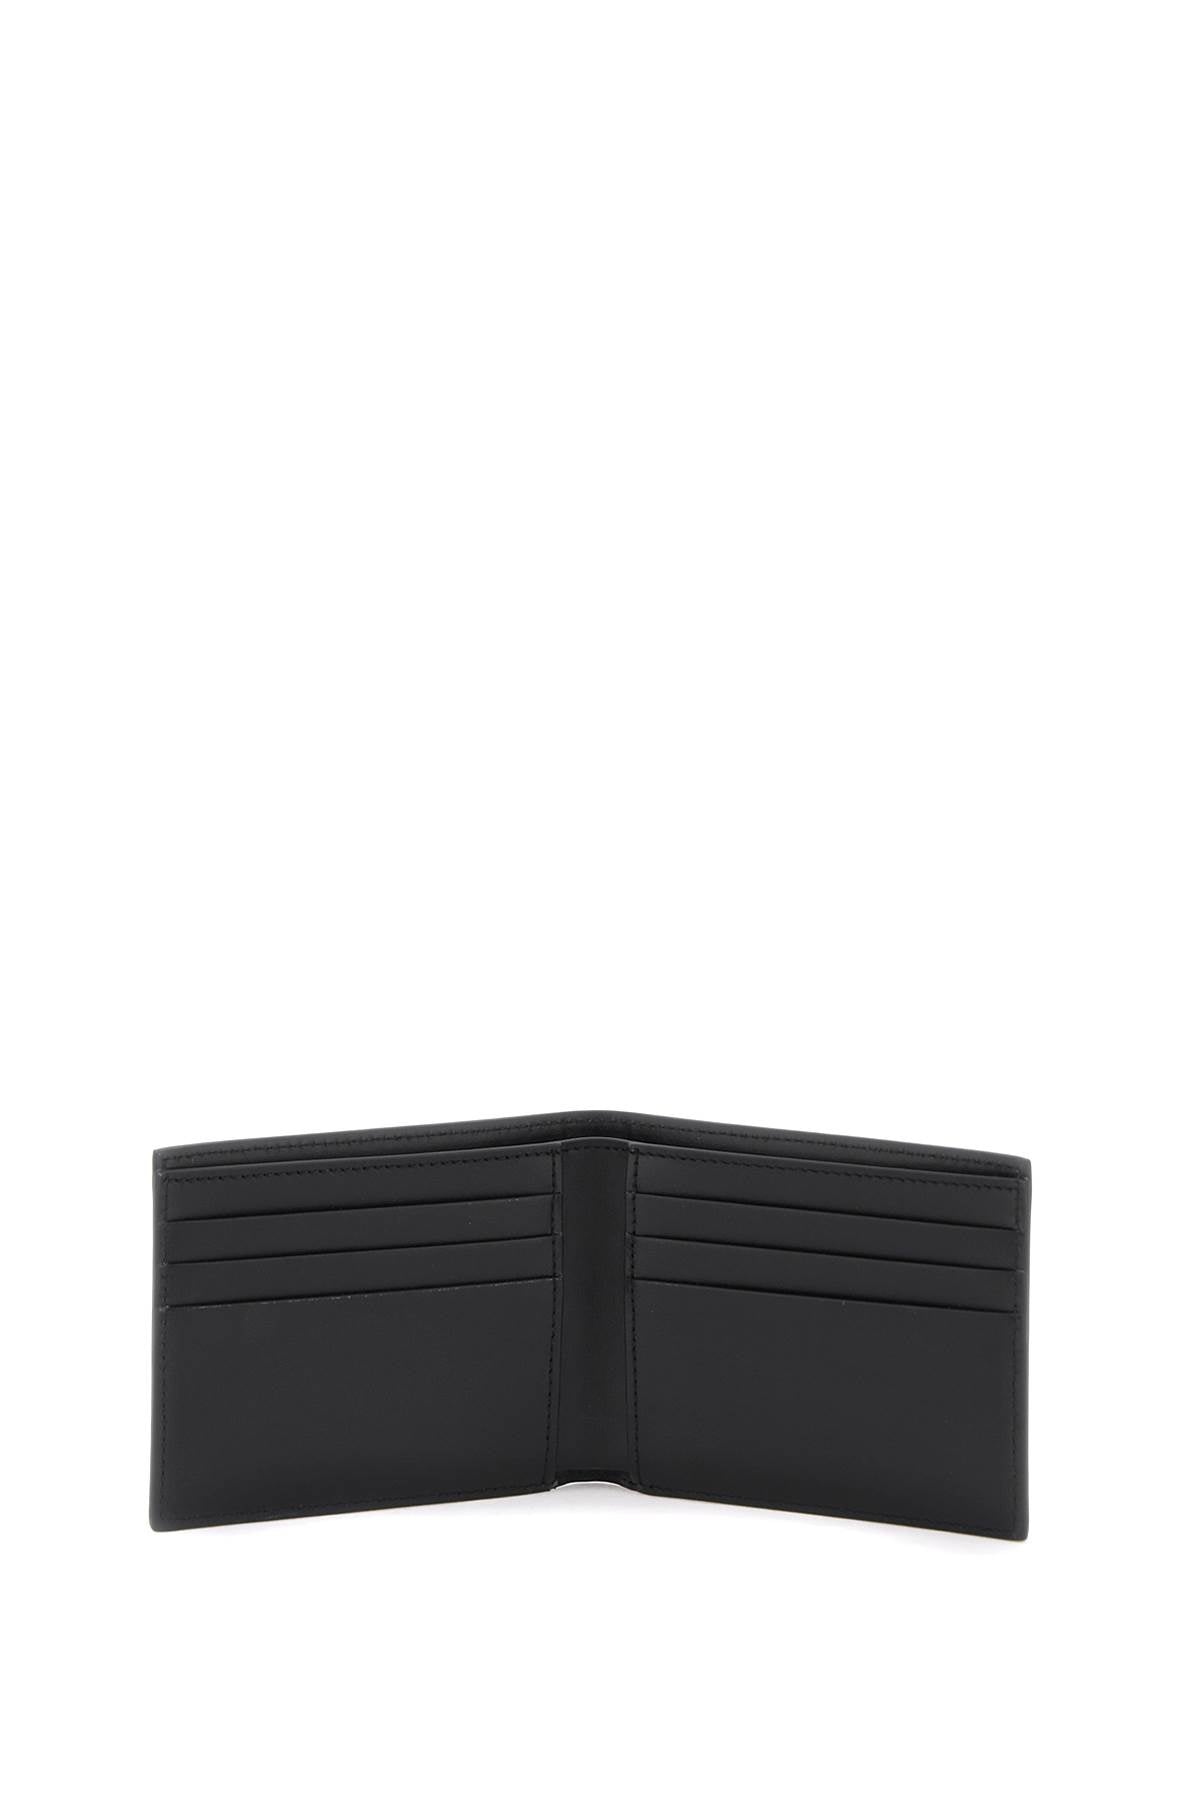 Off-White Off-white bookish logo bi-fold wallet